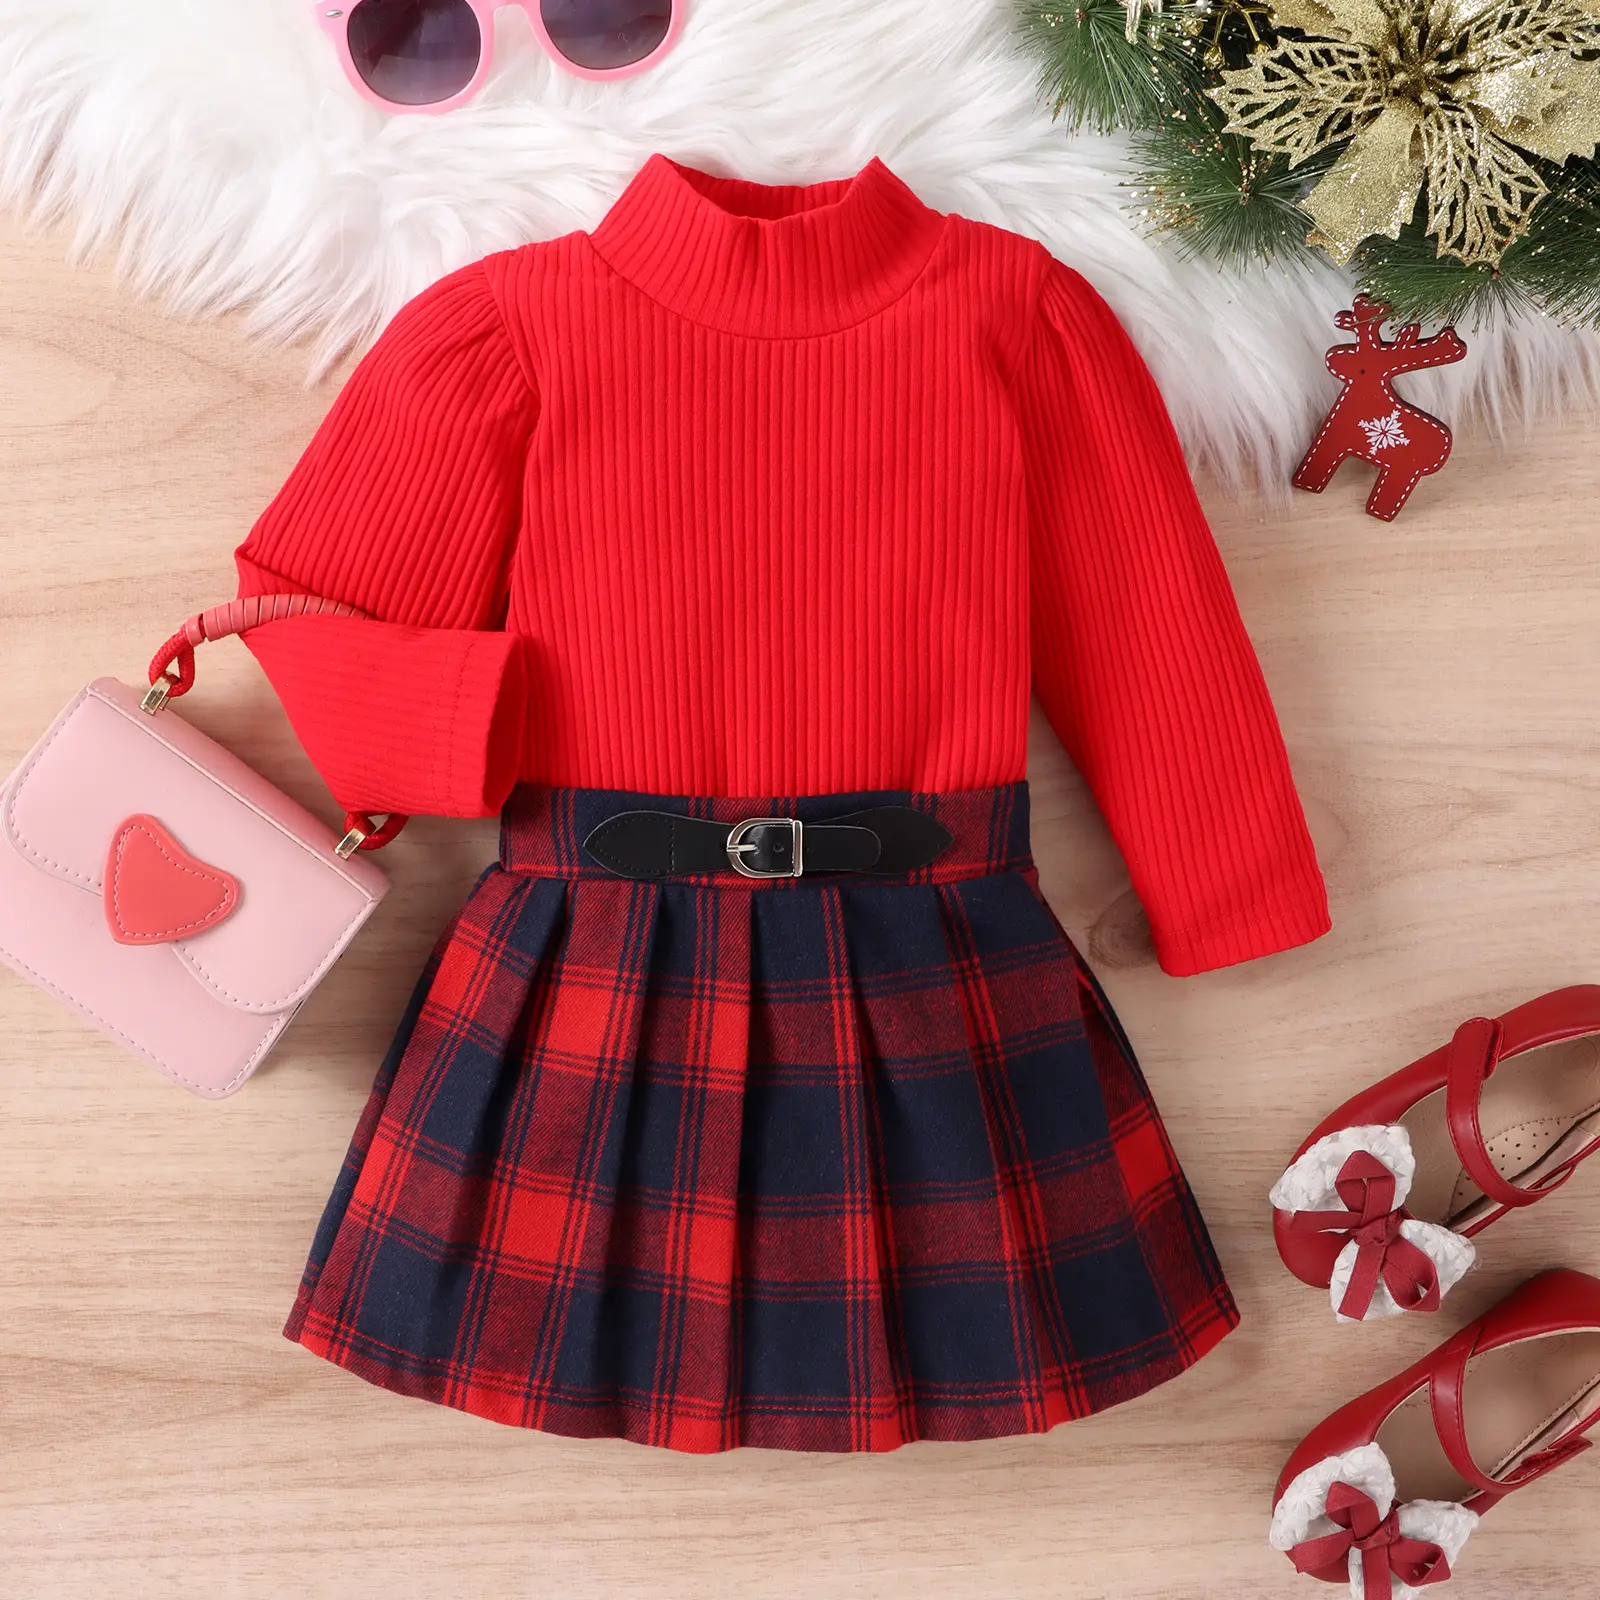 Herbst Mädchen Weihnachten Kleidung Set Kinder rot Langarmhemd Plaid Röcke 2pcs Outfit